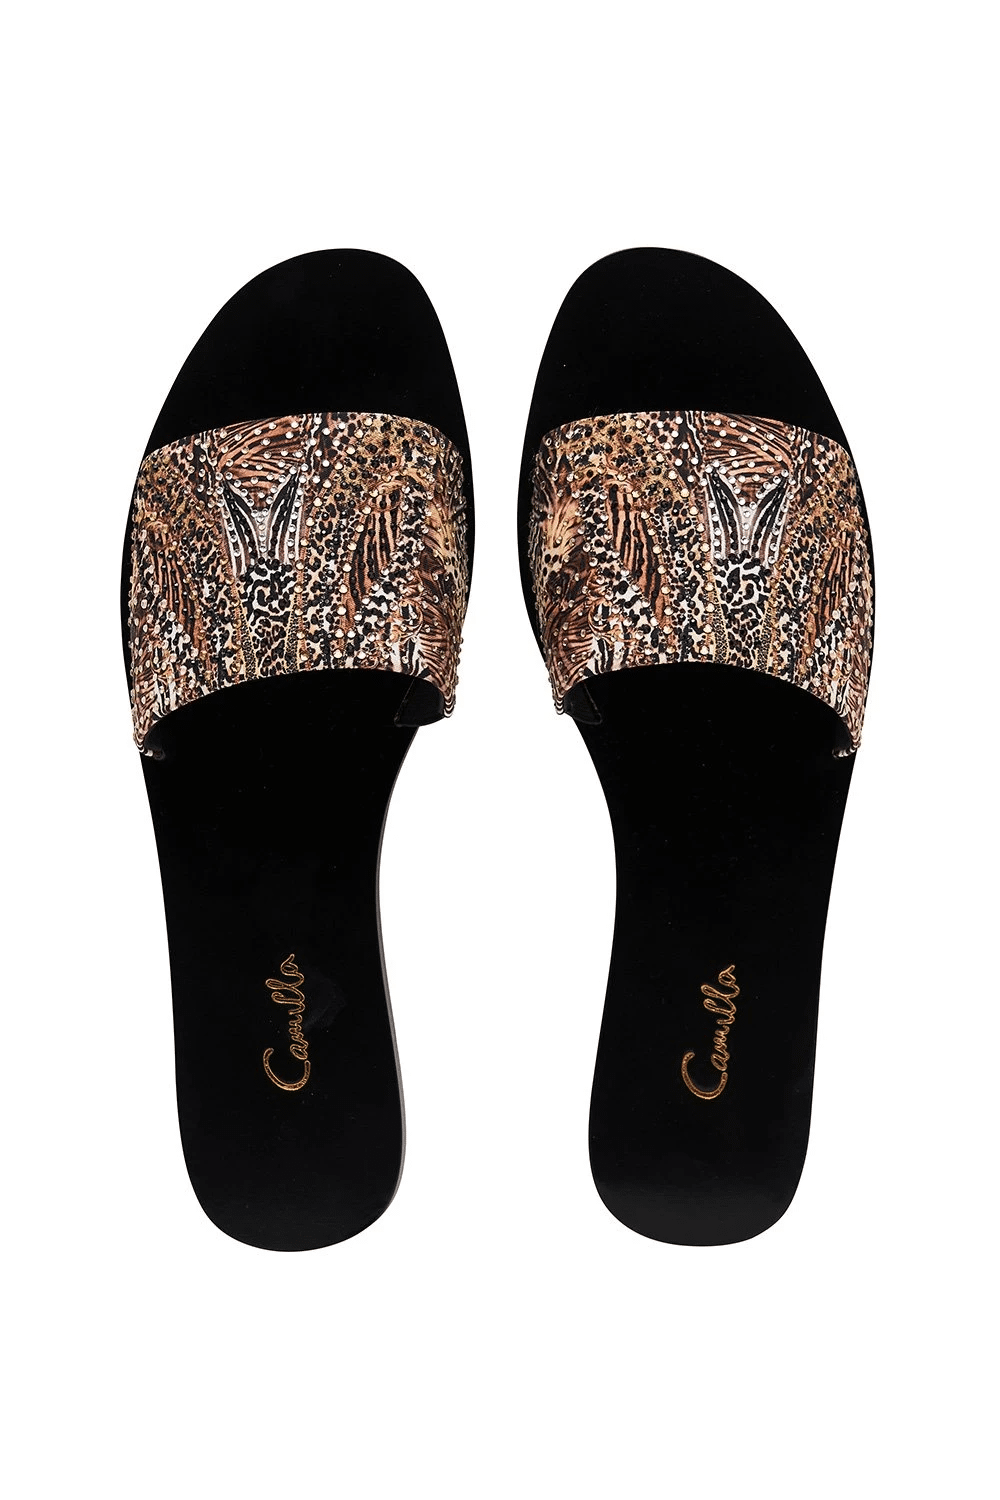 Printed Summer Sandals for Ladies